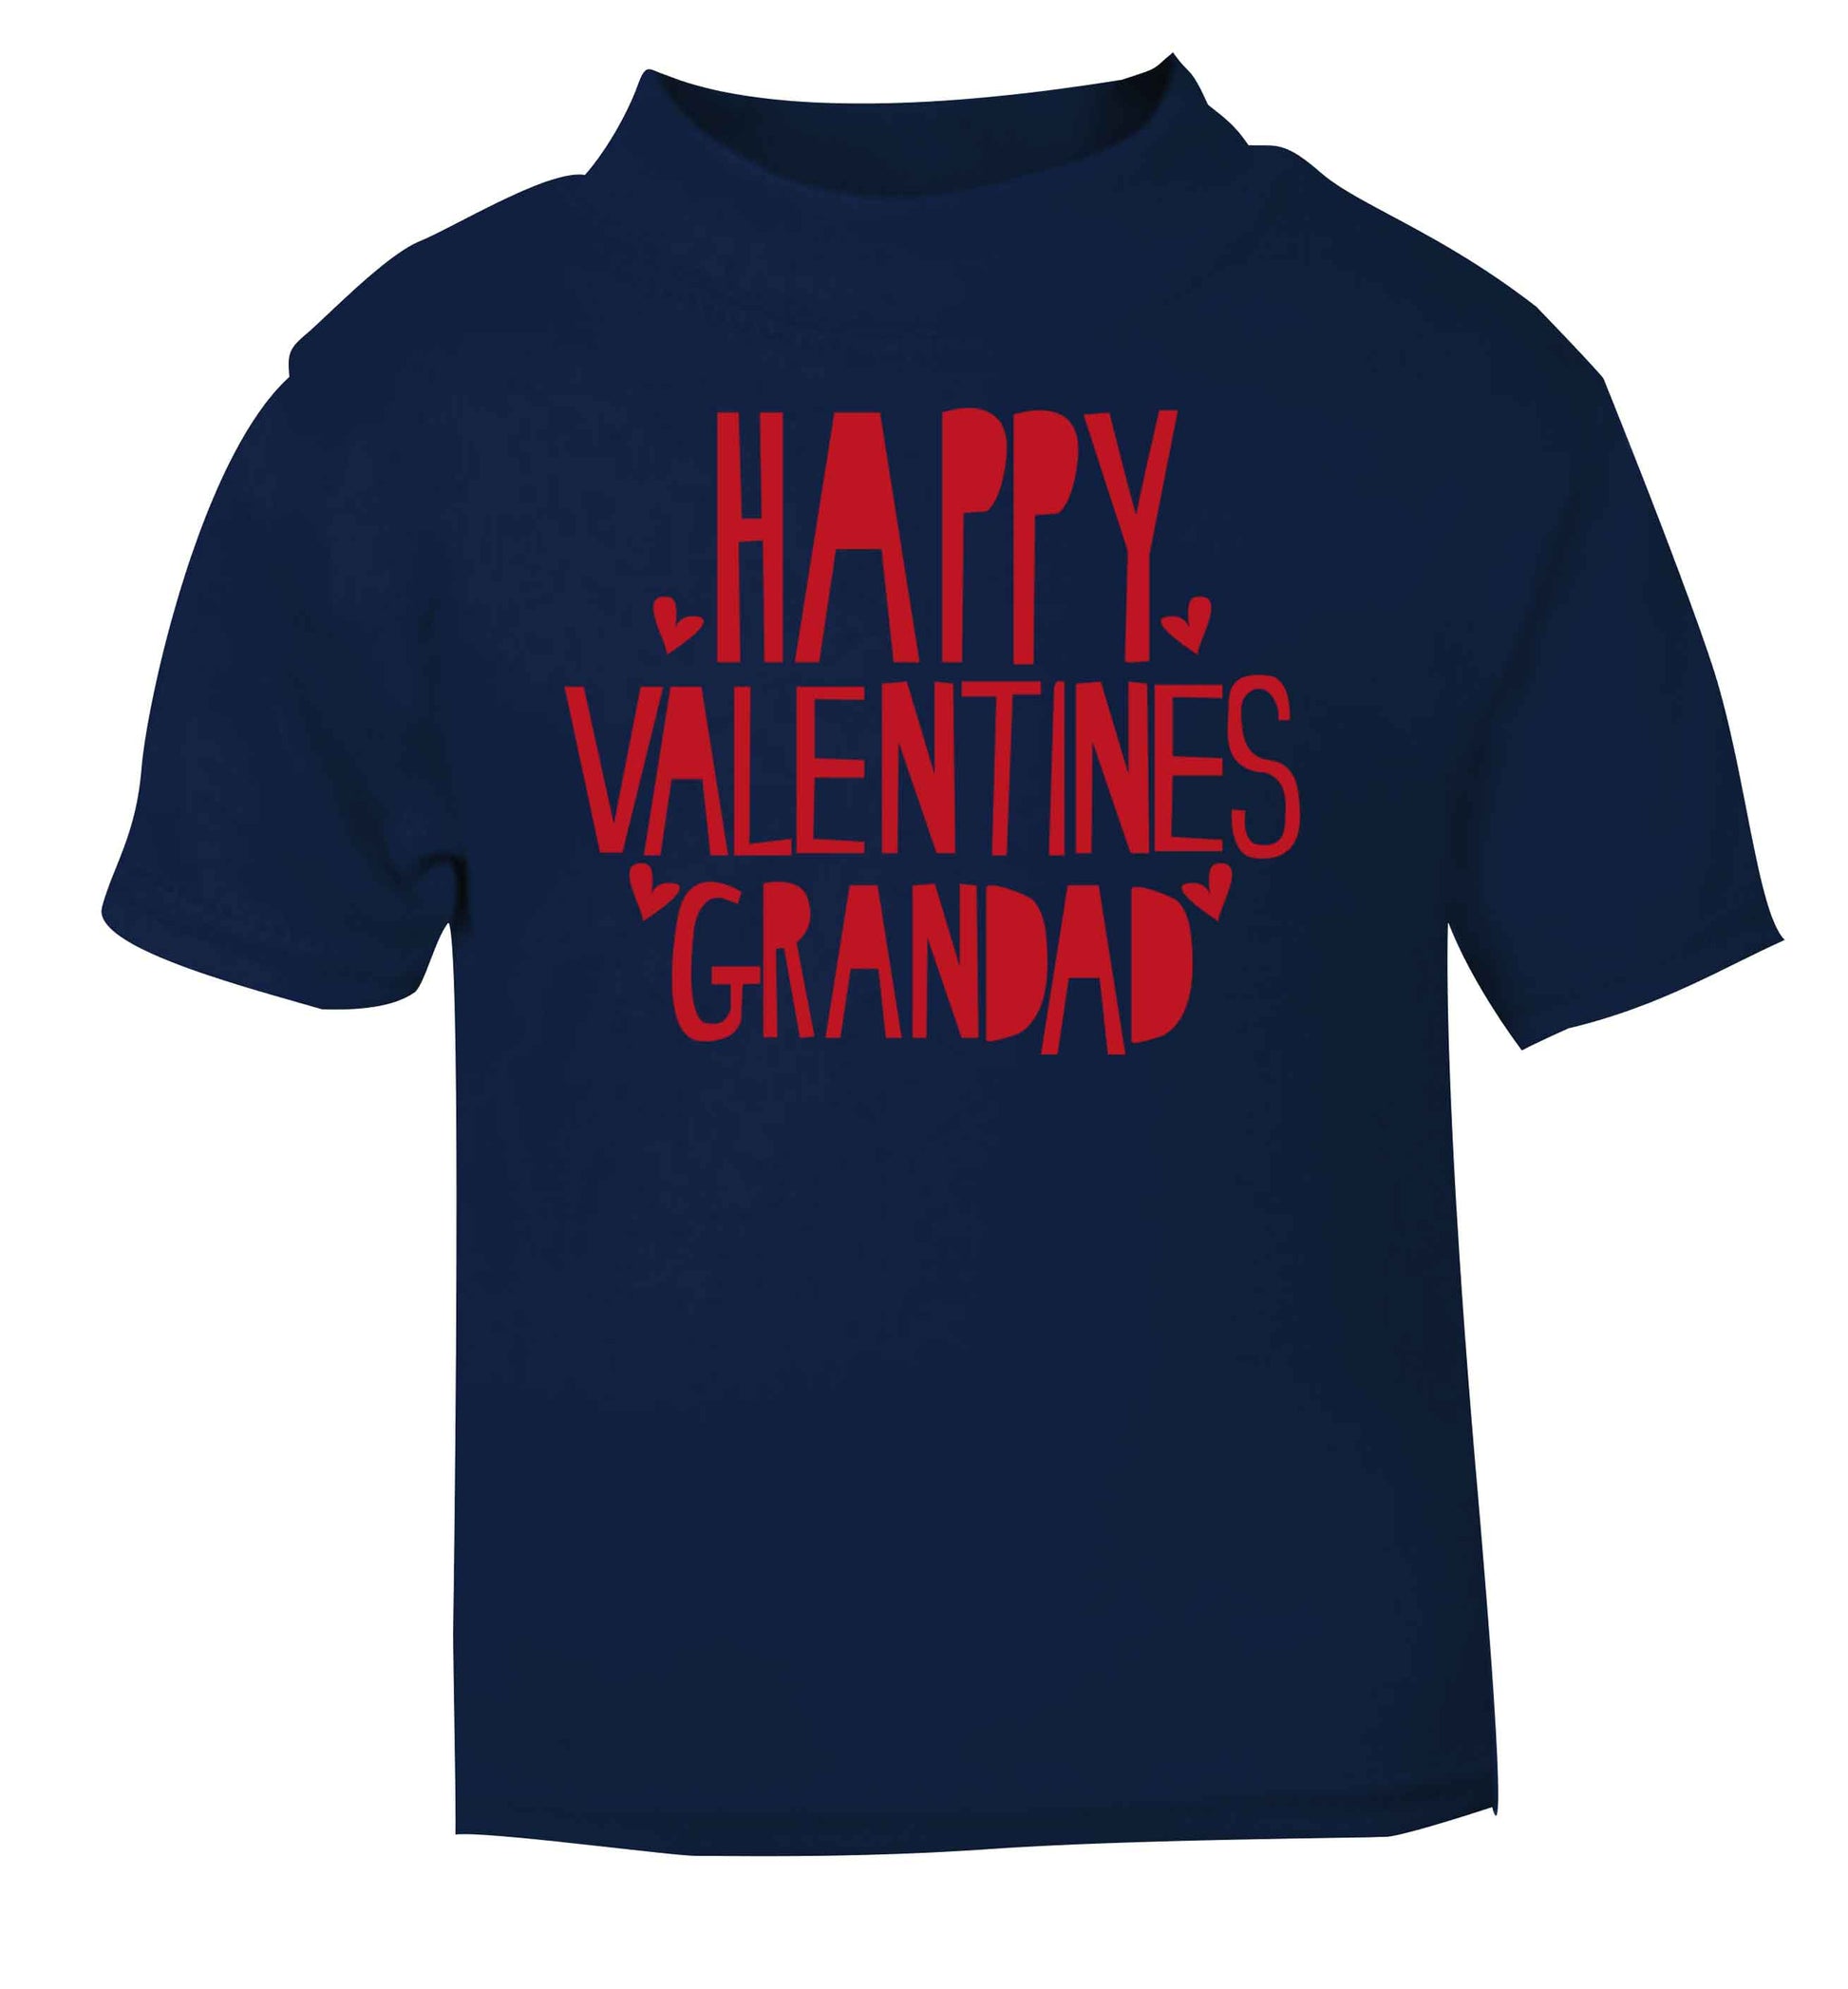 Happy valentines grandad navy baby toddler Tshirt 2 Years